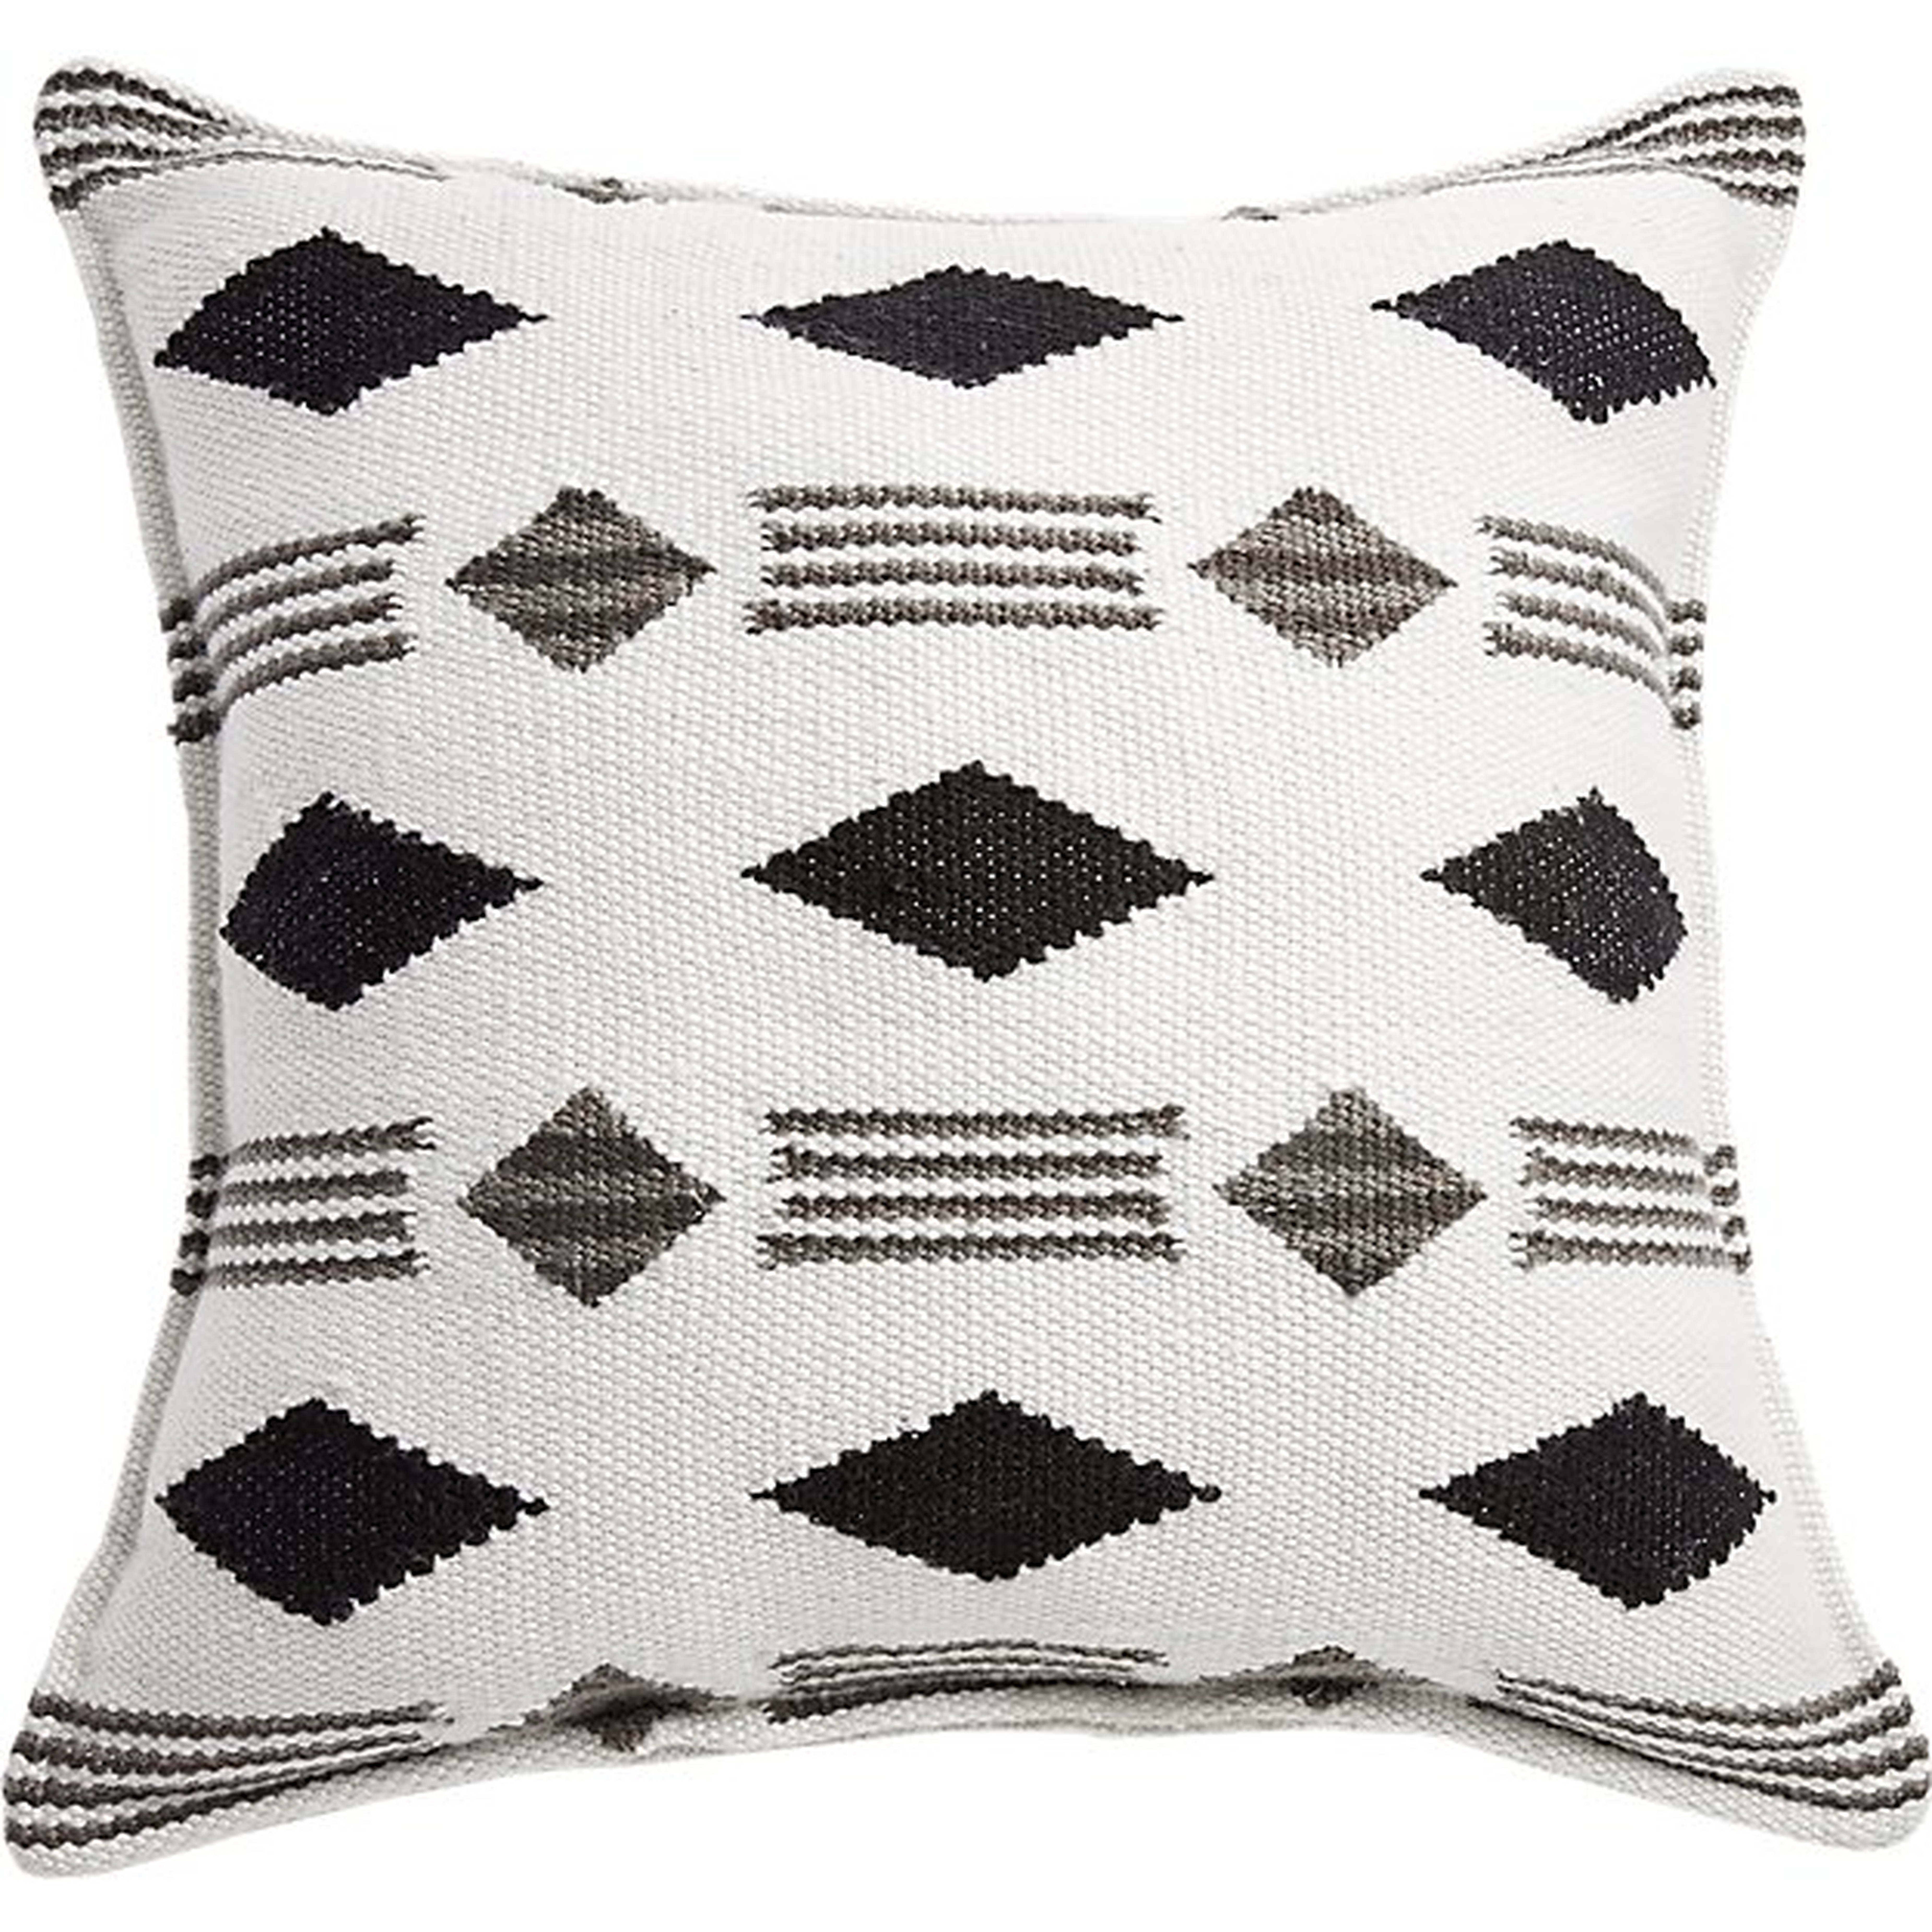 20" loreto black and white outdoor pillow - CB2